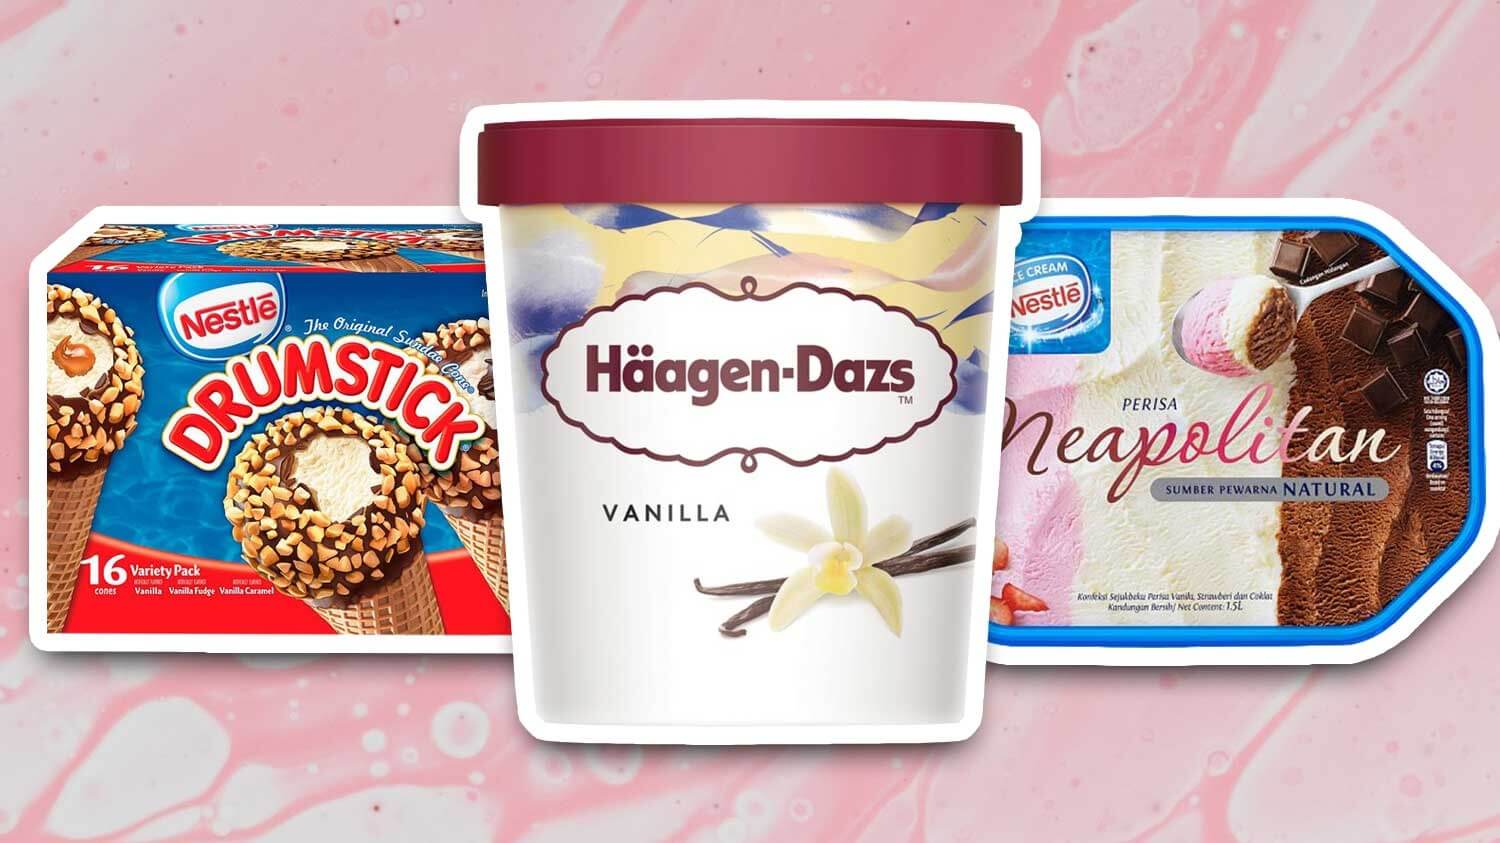 Nestlé Will No Longer Produce Dairy Ice Cream in the U.S.